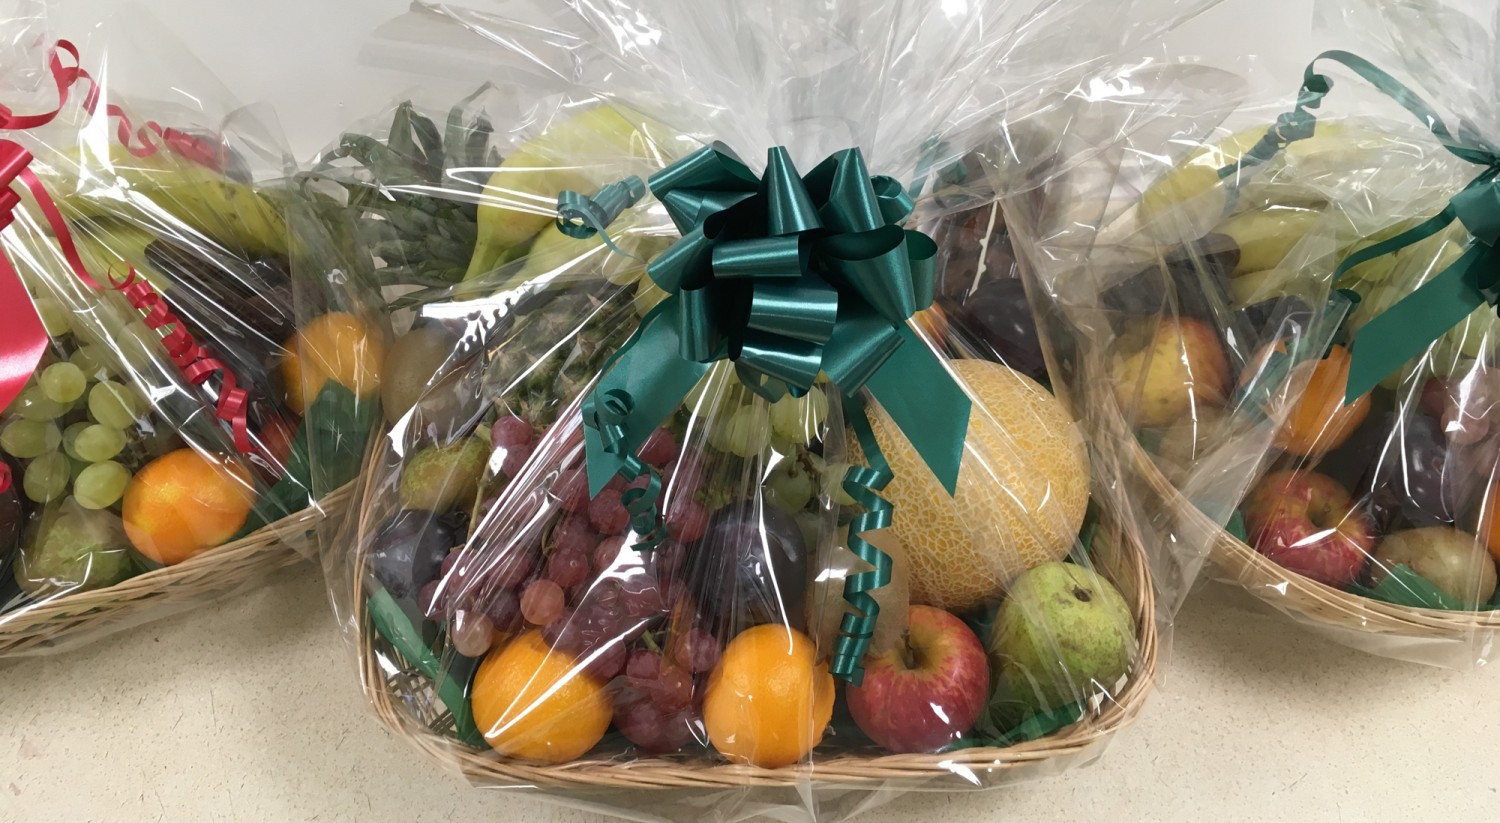 Fruit Baskets Make the Perfect Gifting Option